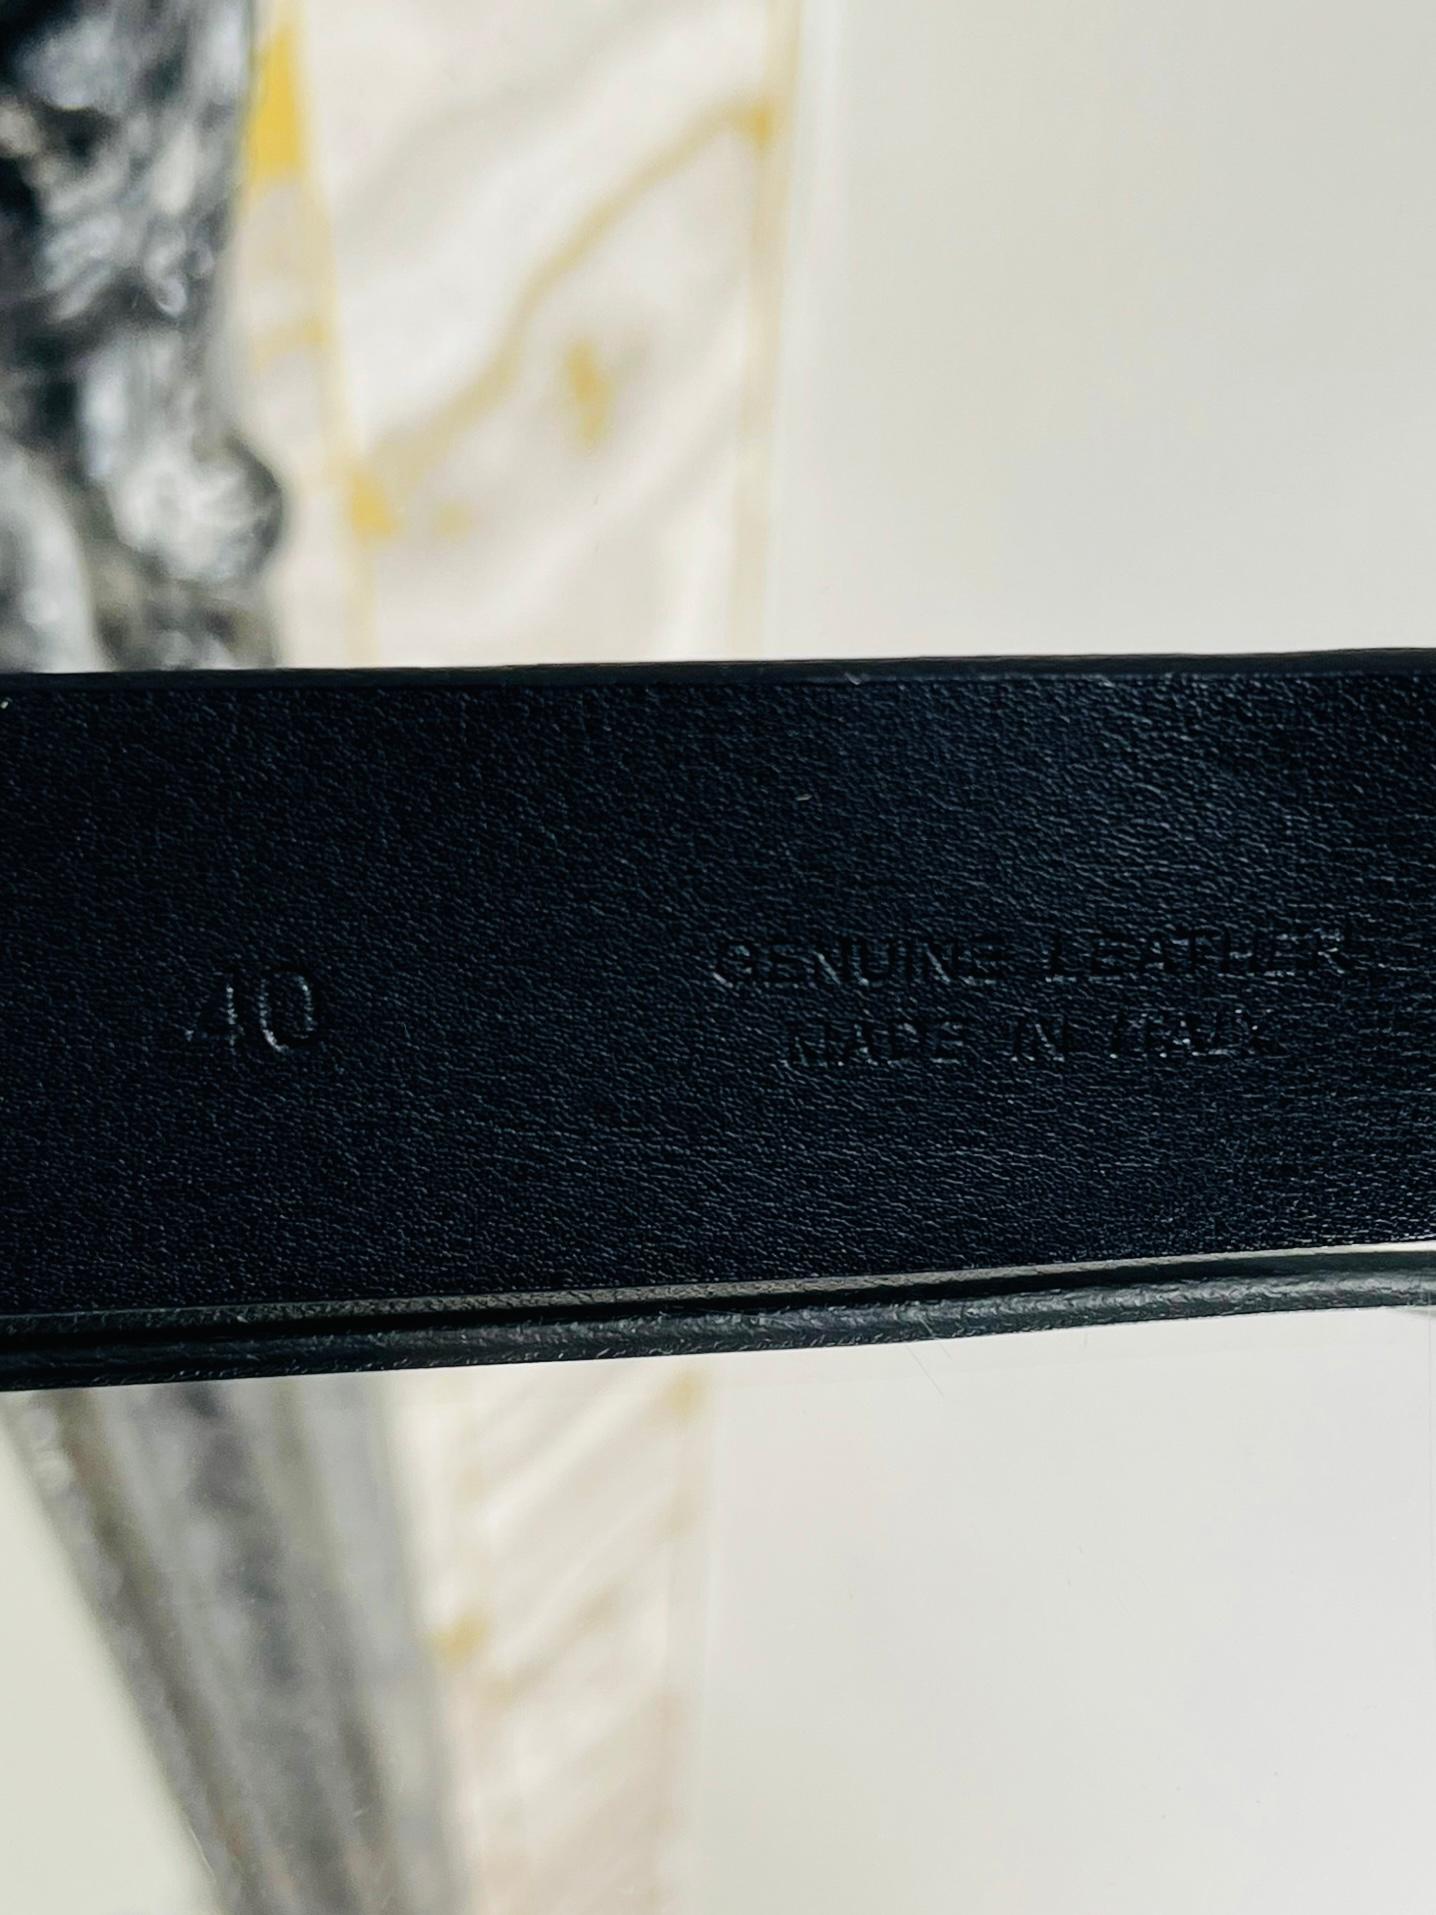 Versus Versace Lion Head Leather Belt 5